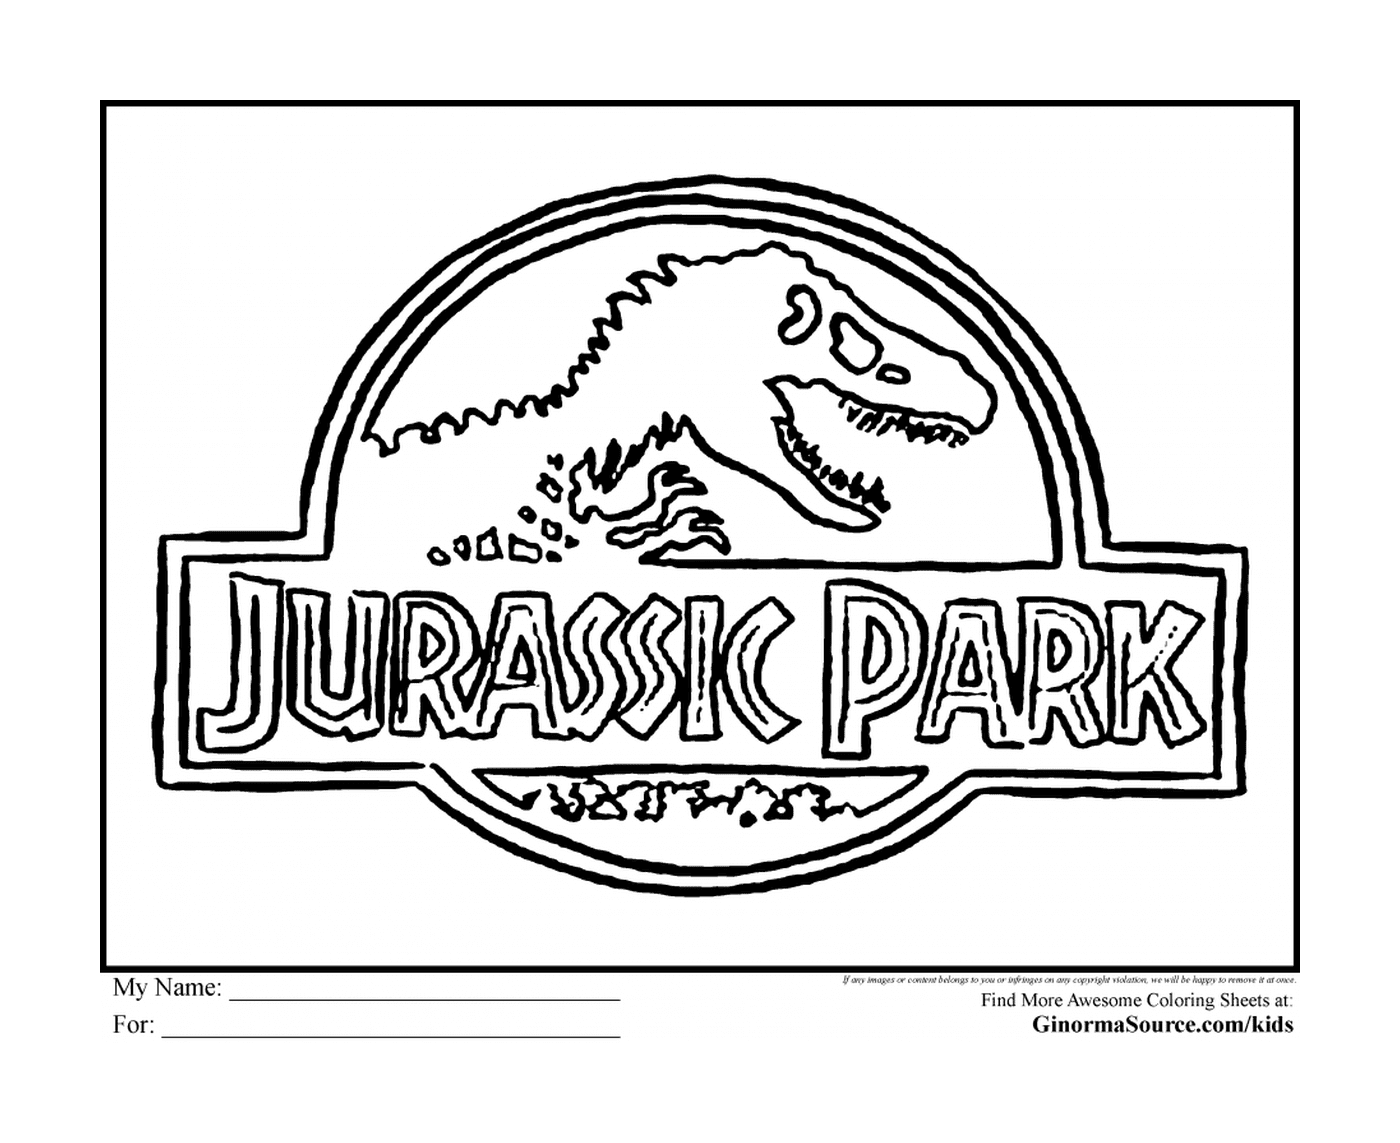  Jurassic Park logo, symbol of adventure 